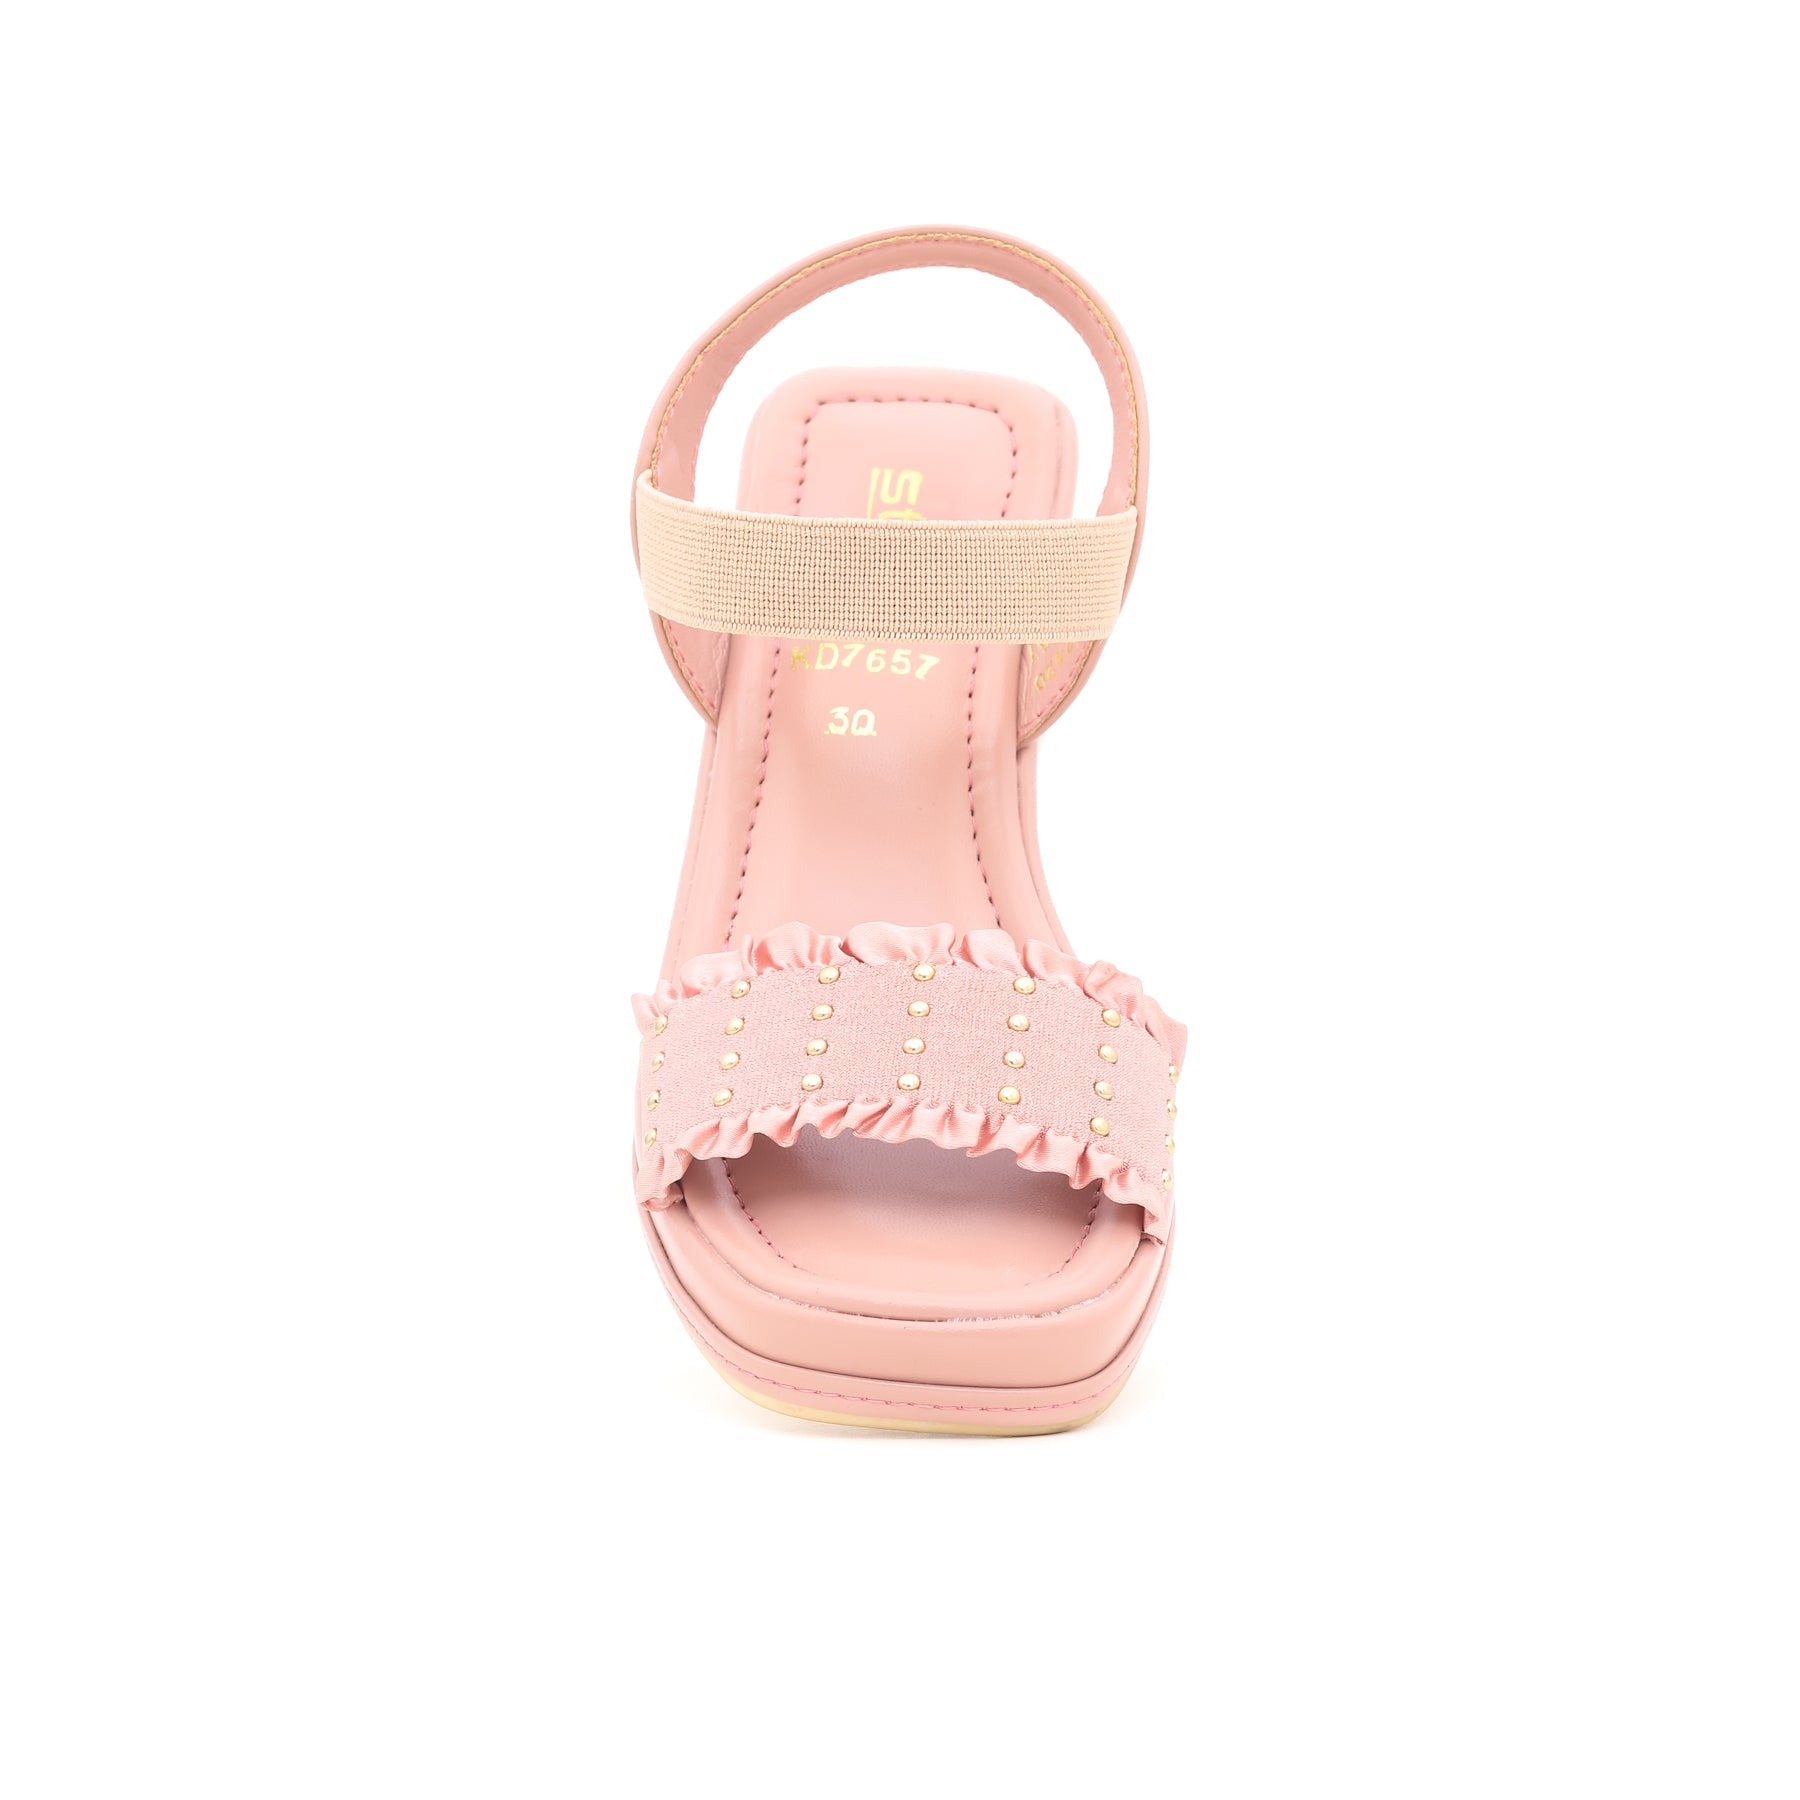 Girls Pink Formal Sandal KD7657